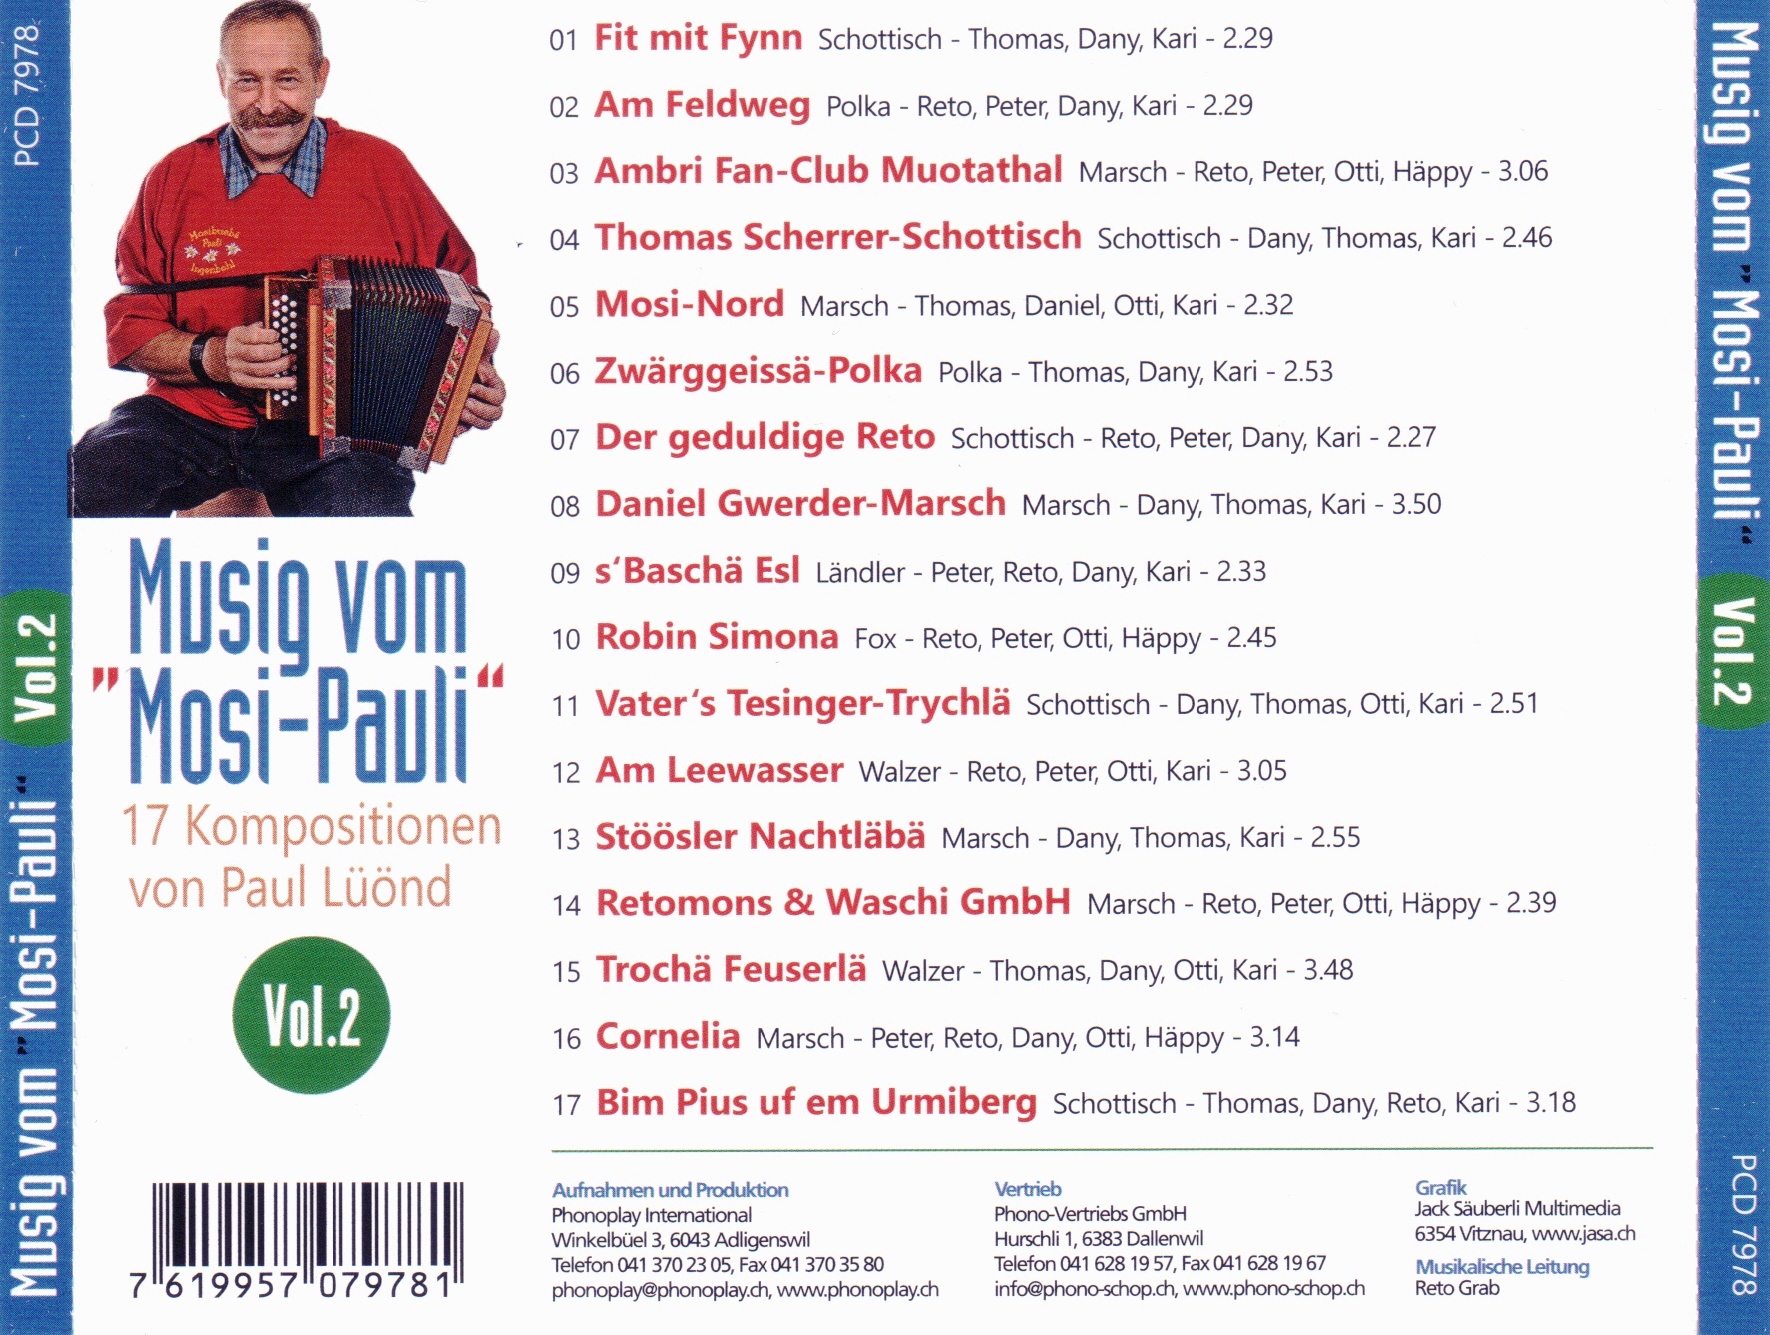 Mosi-Pauli CD 2